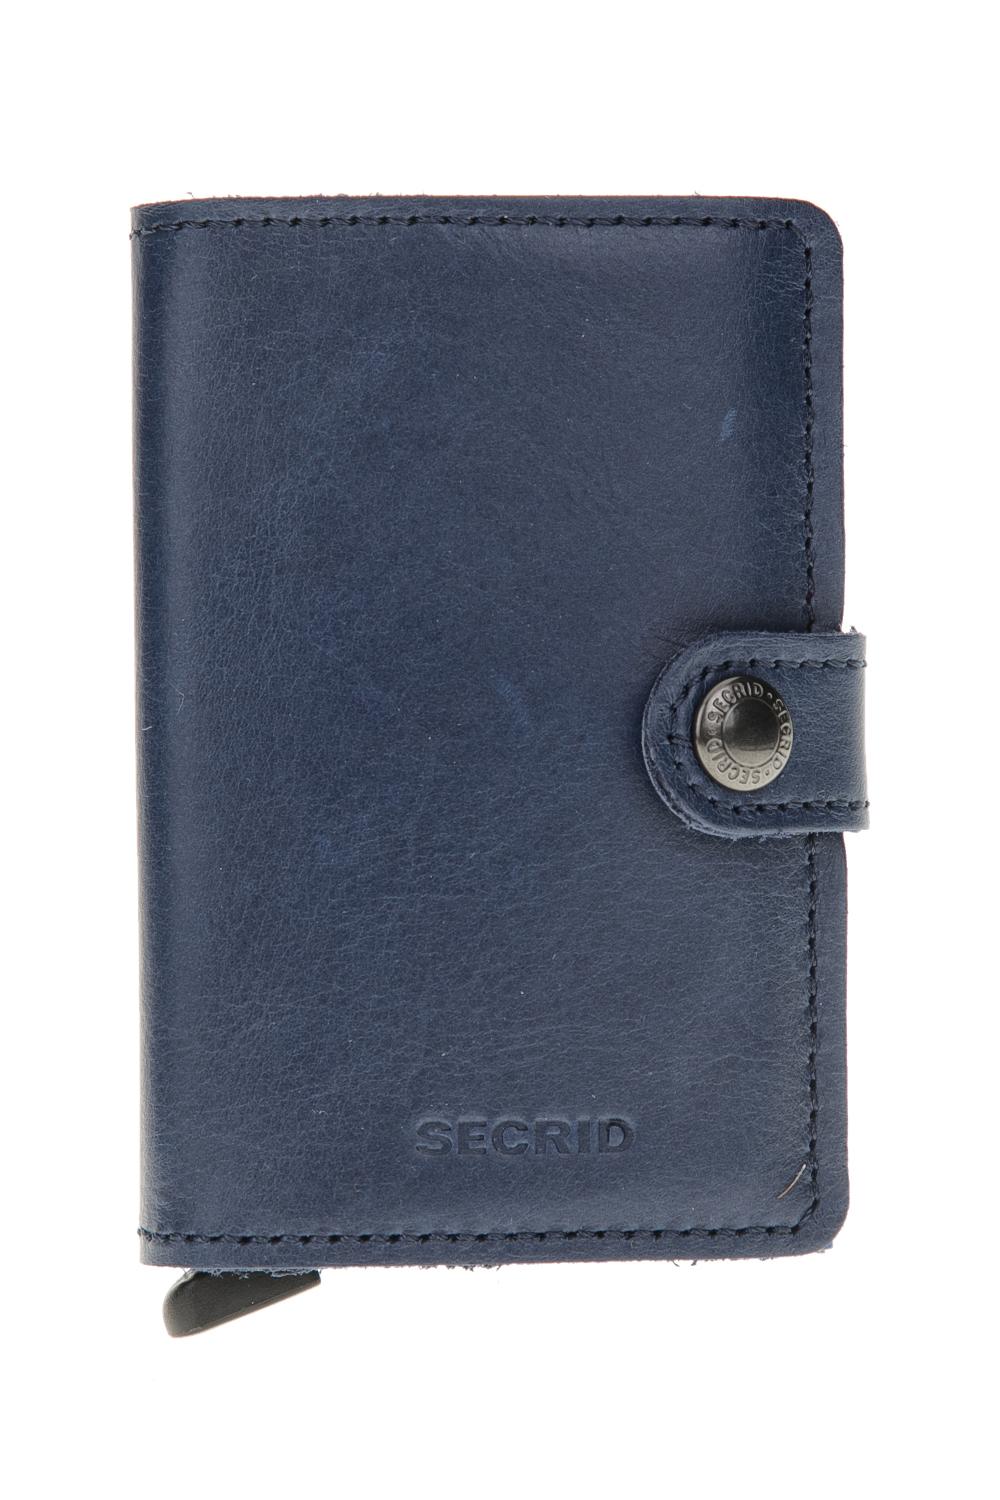 SECRID – Θηκη καρτων SECRID Miniwallet Original Navy μπλε